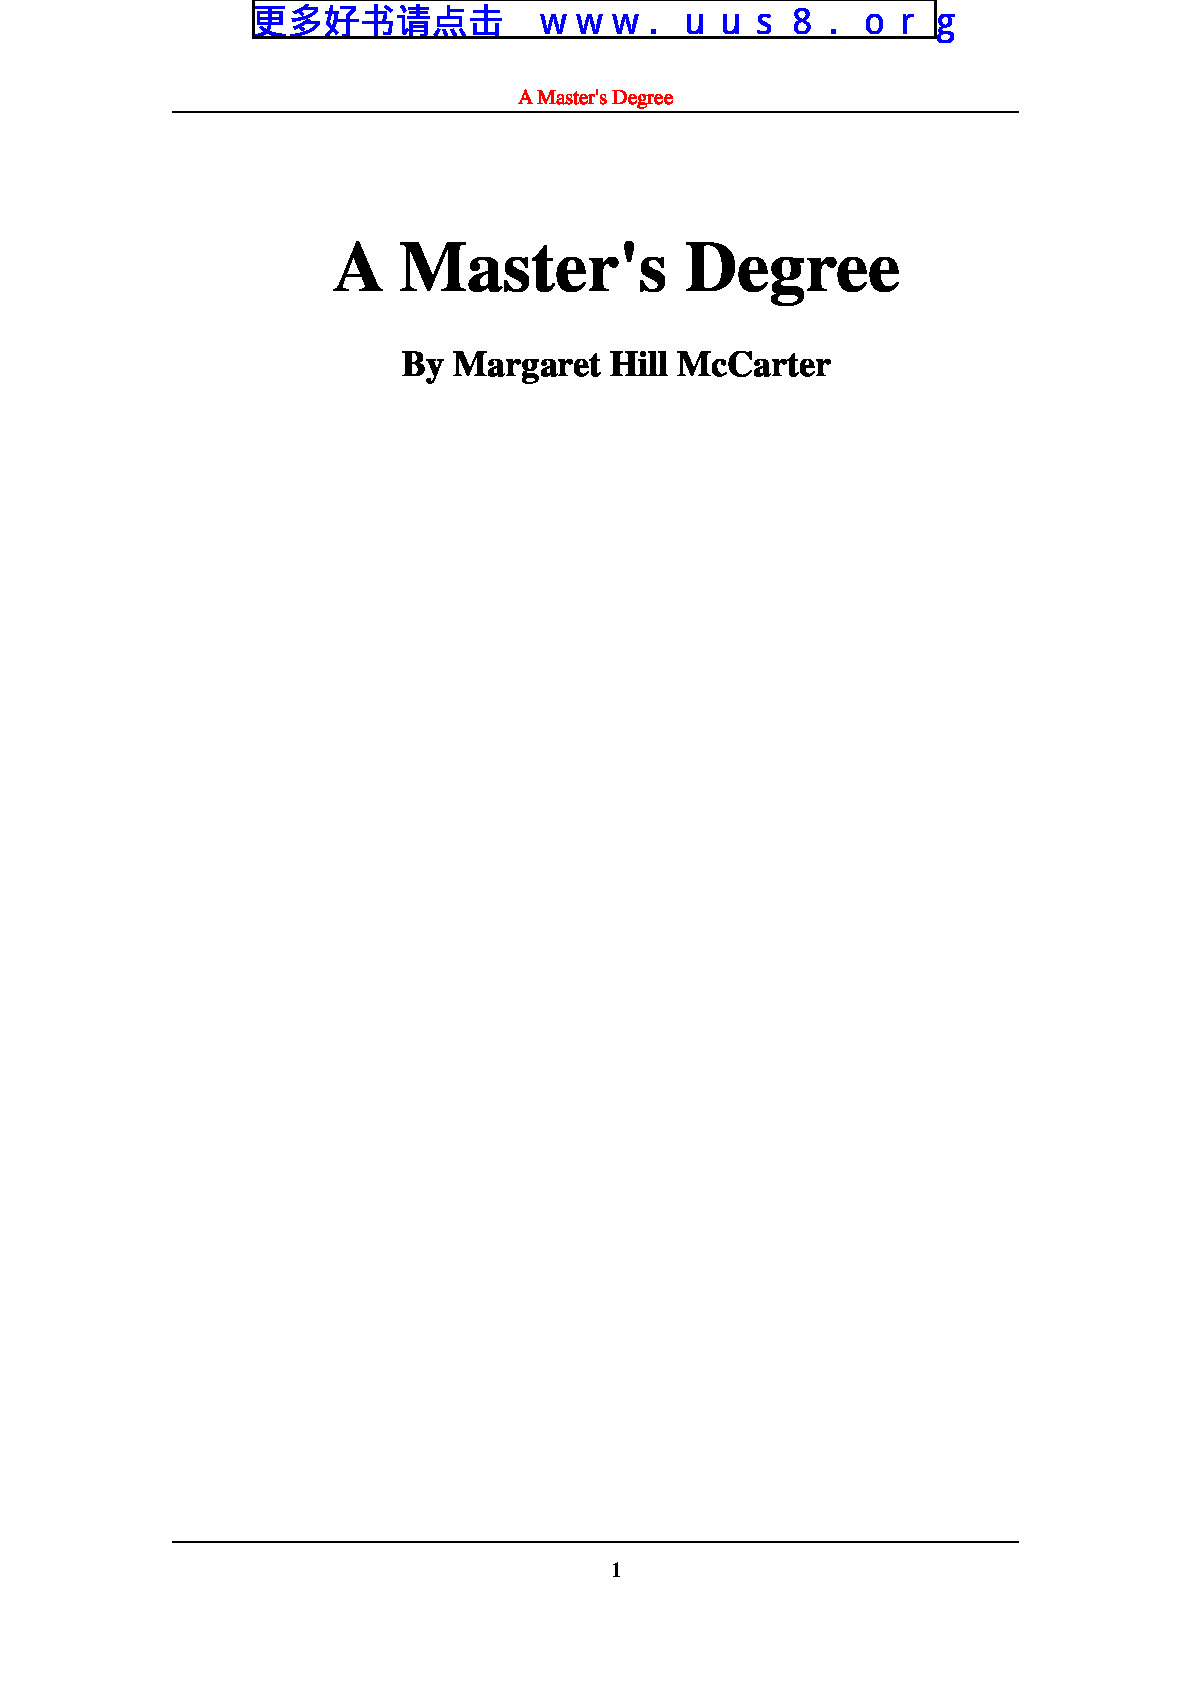 a_master’s_degree(硕士学位)